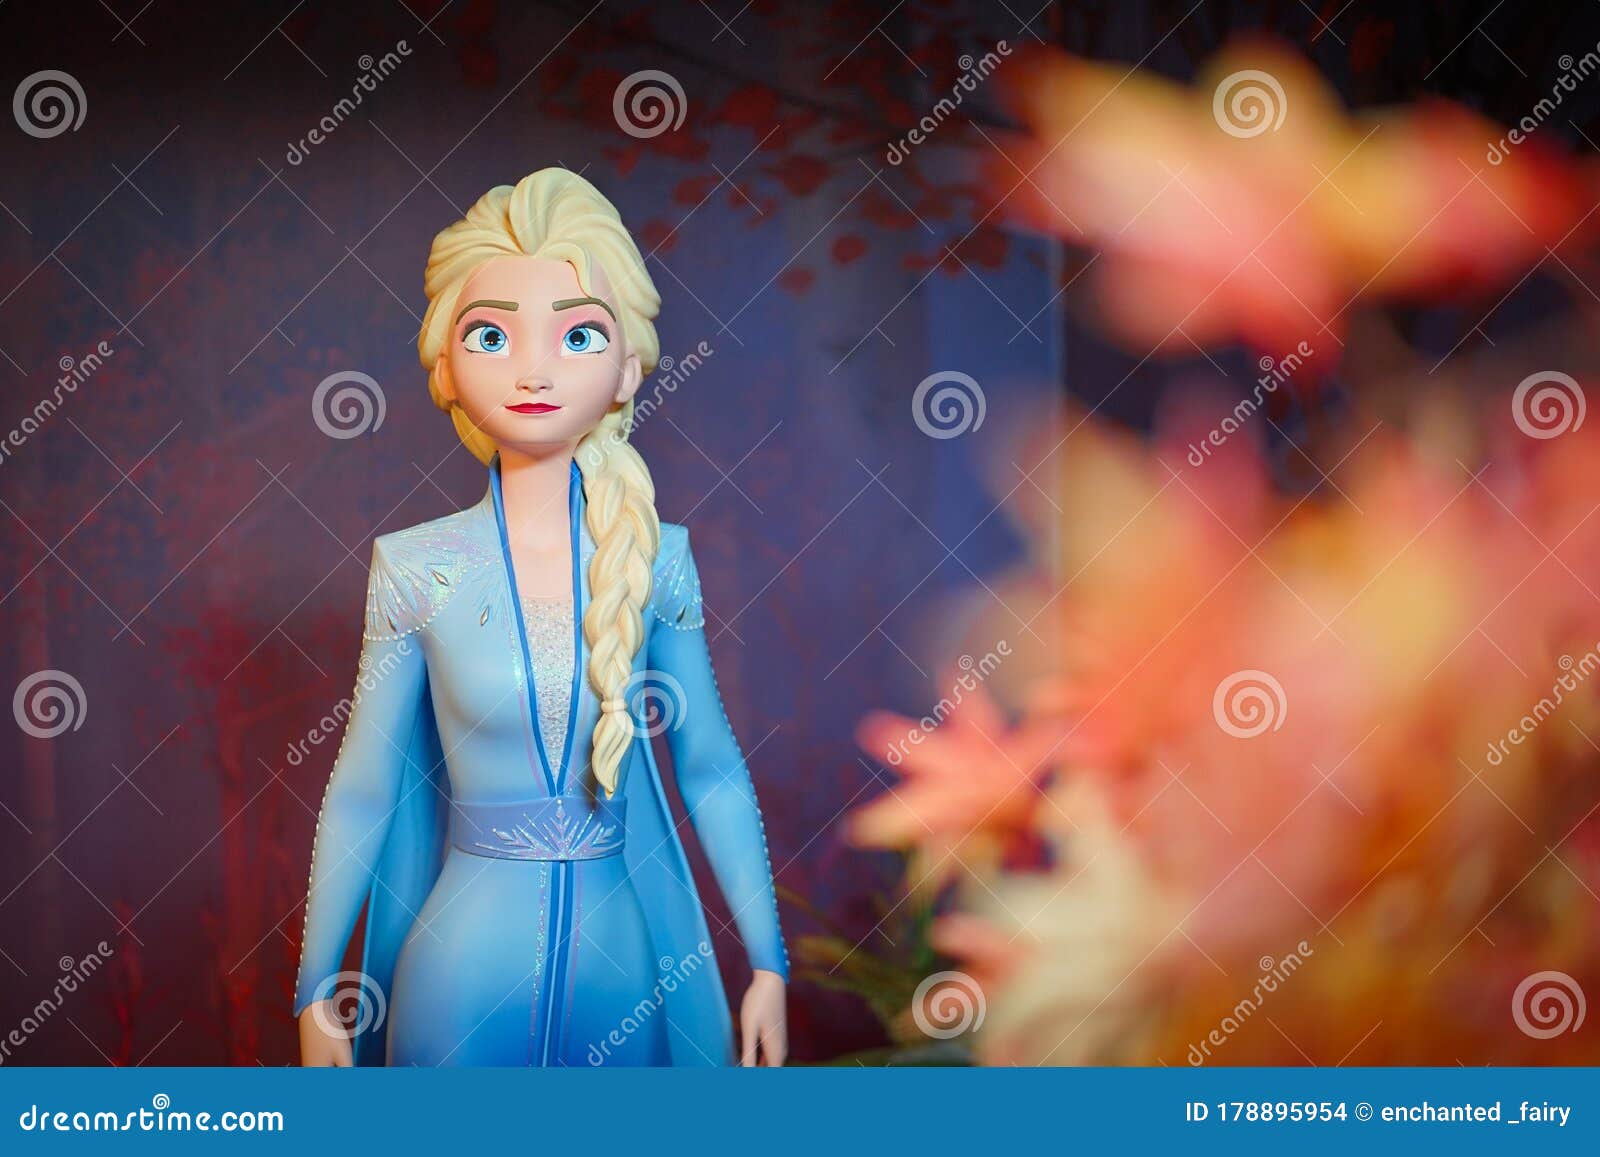 118 Frozen Elsa Animation Stock Photos - Free & Royalty-Free Stock Photos  from Dreamstime